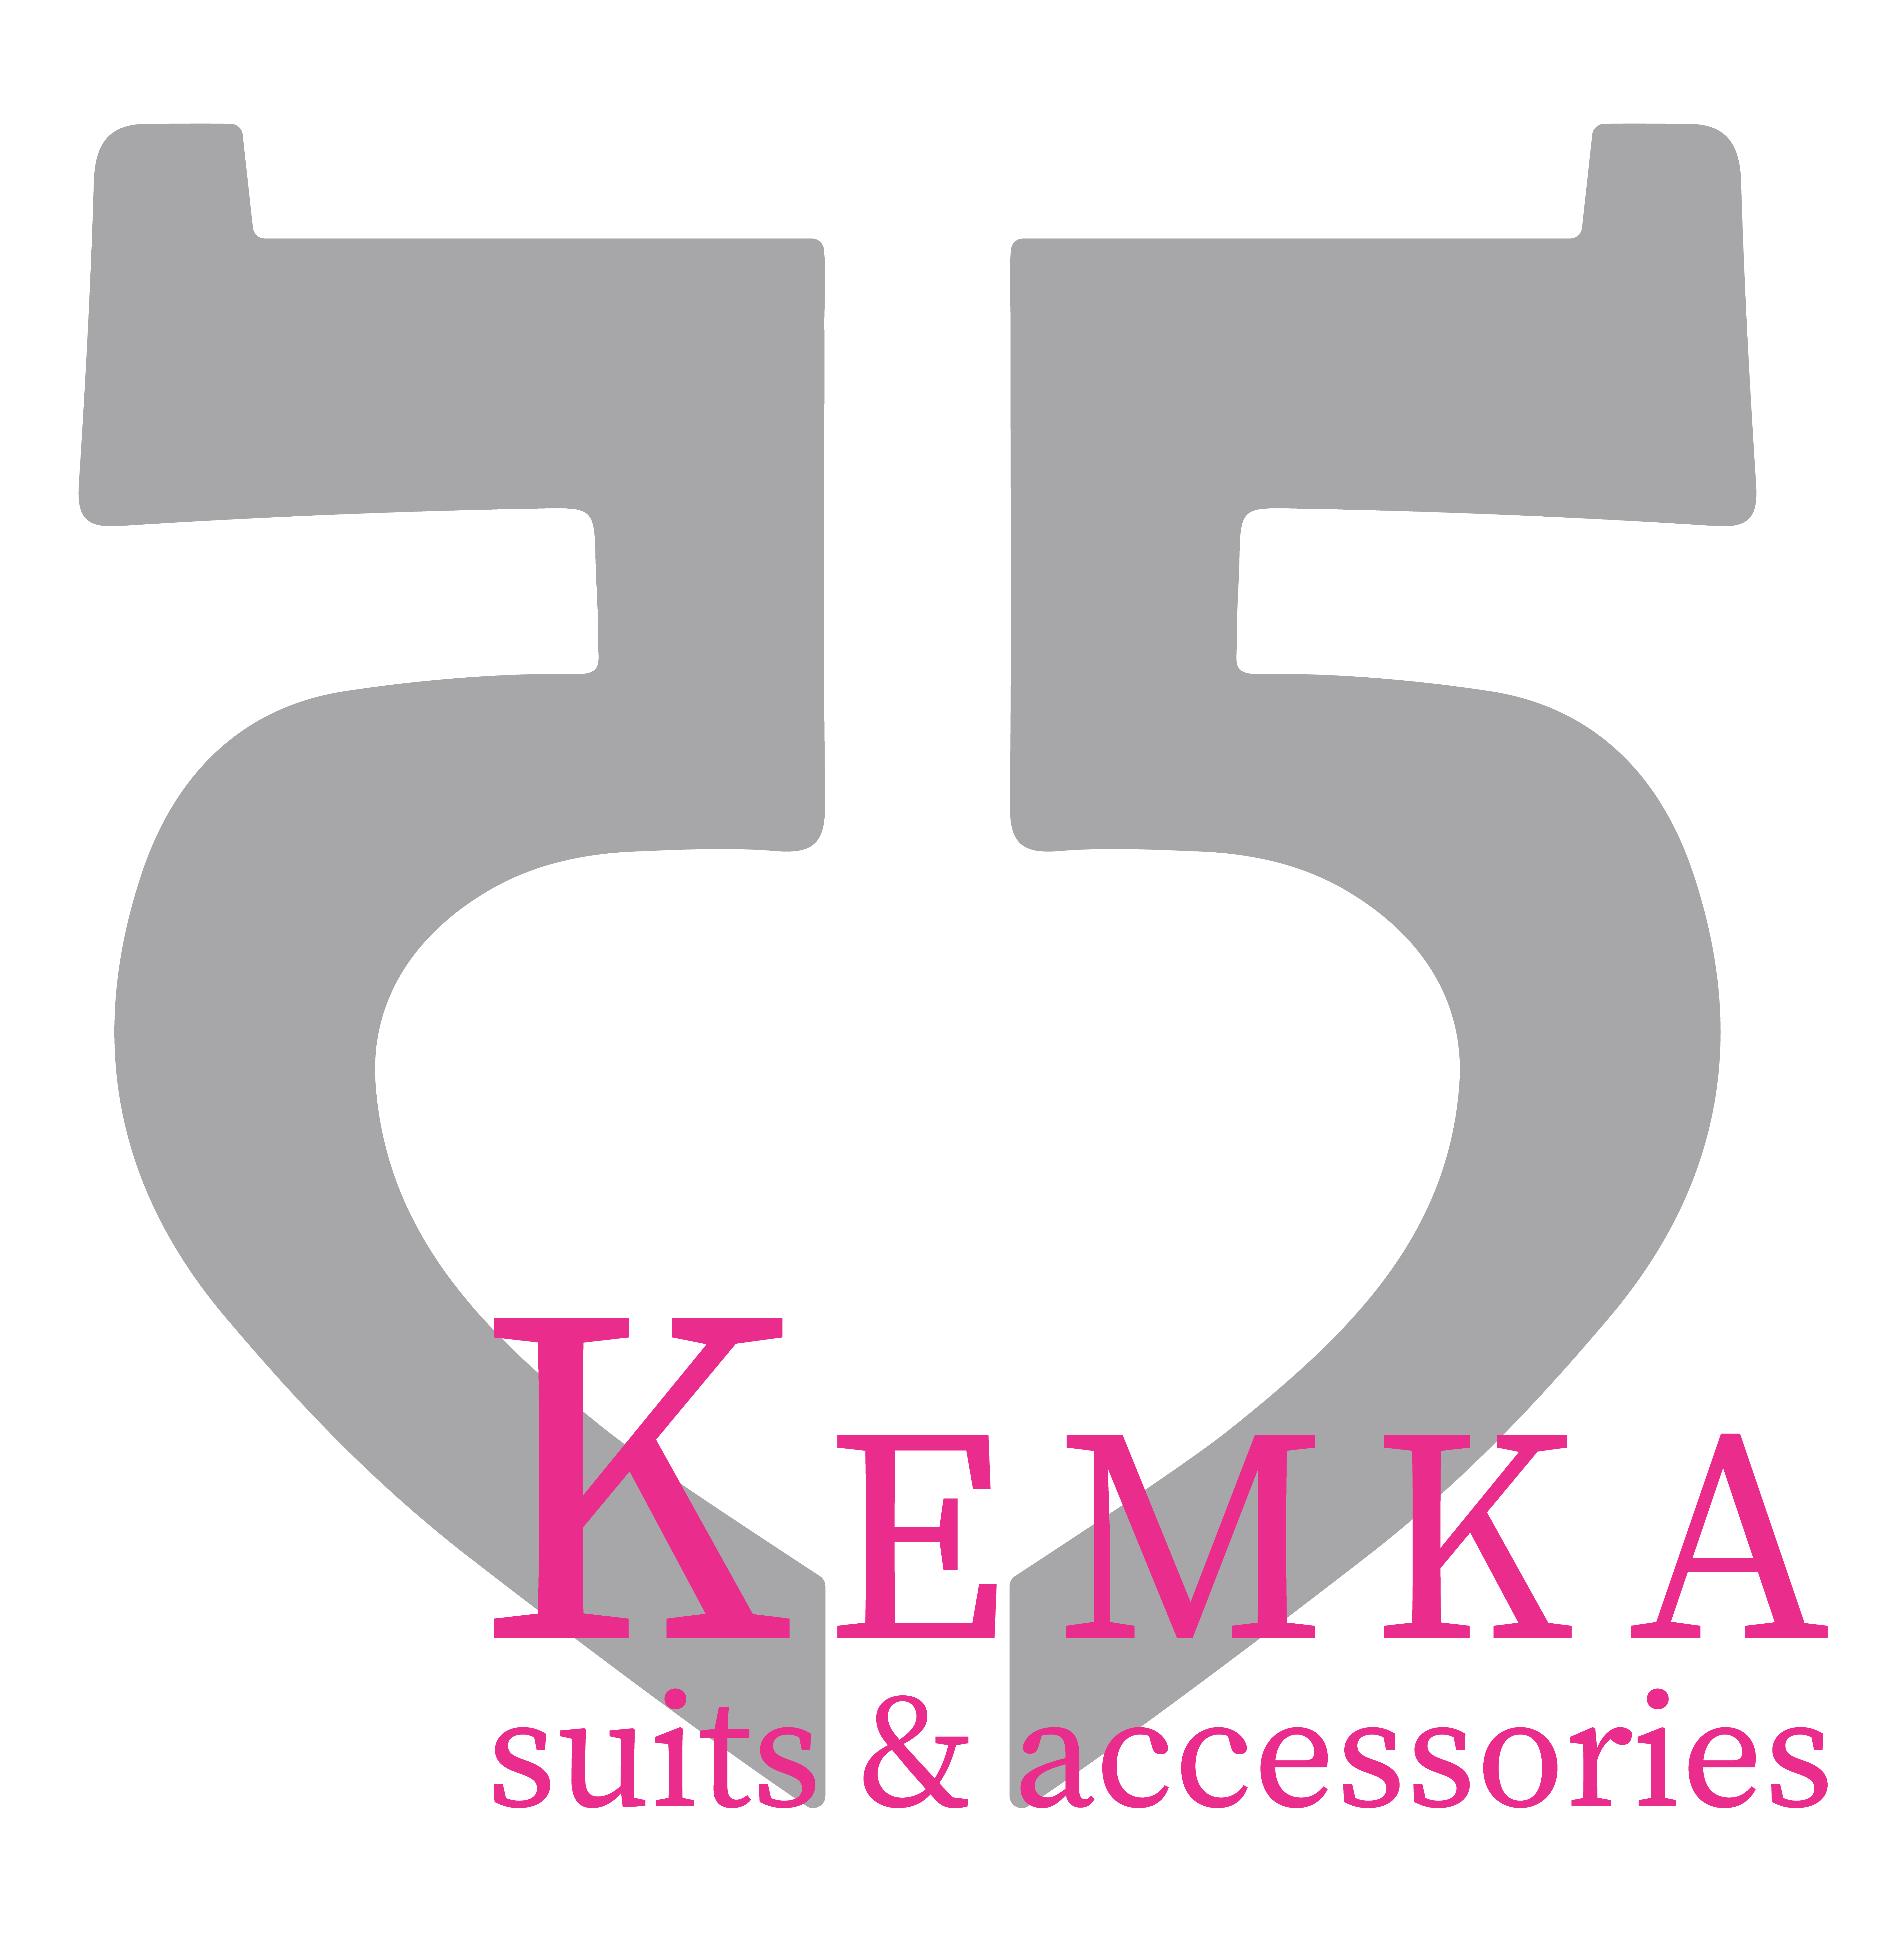 Kemka Online Store